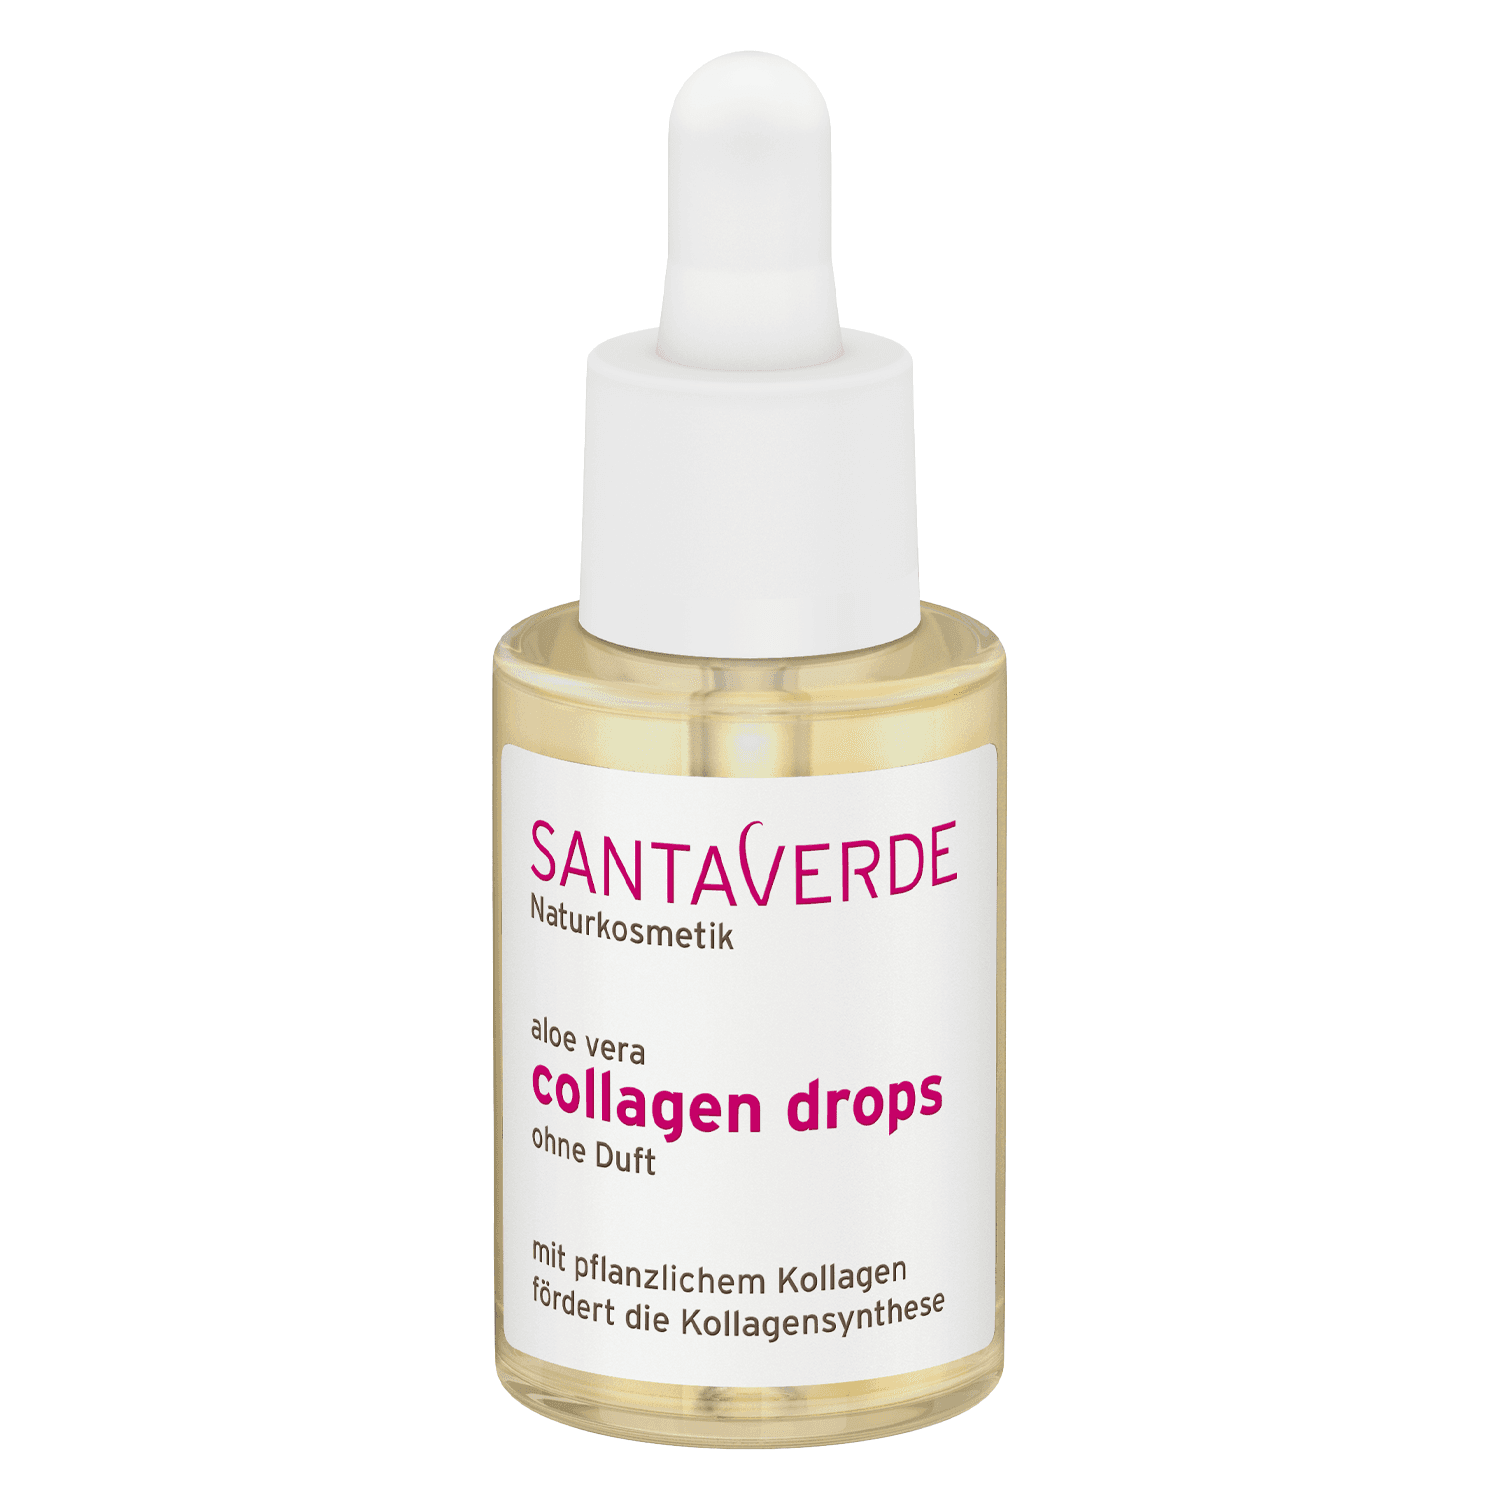 SANTAVERDE - aloe vera collagen drops without fragrance